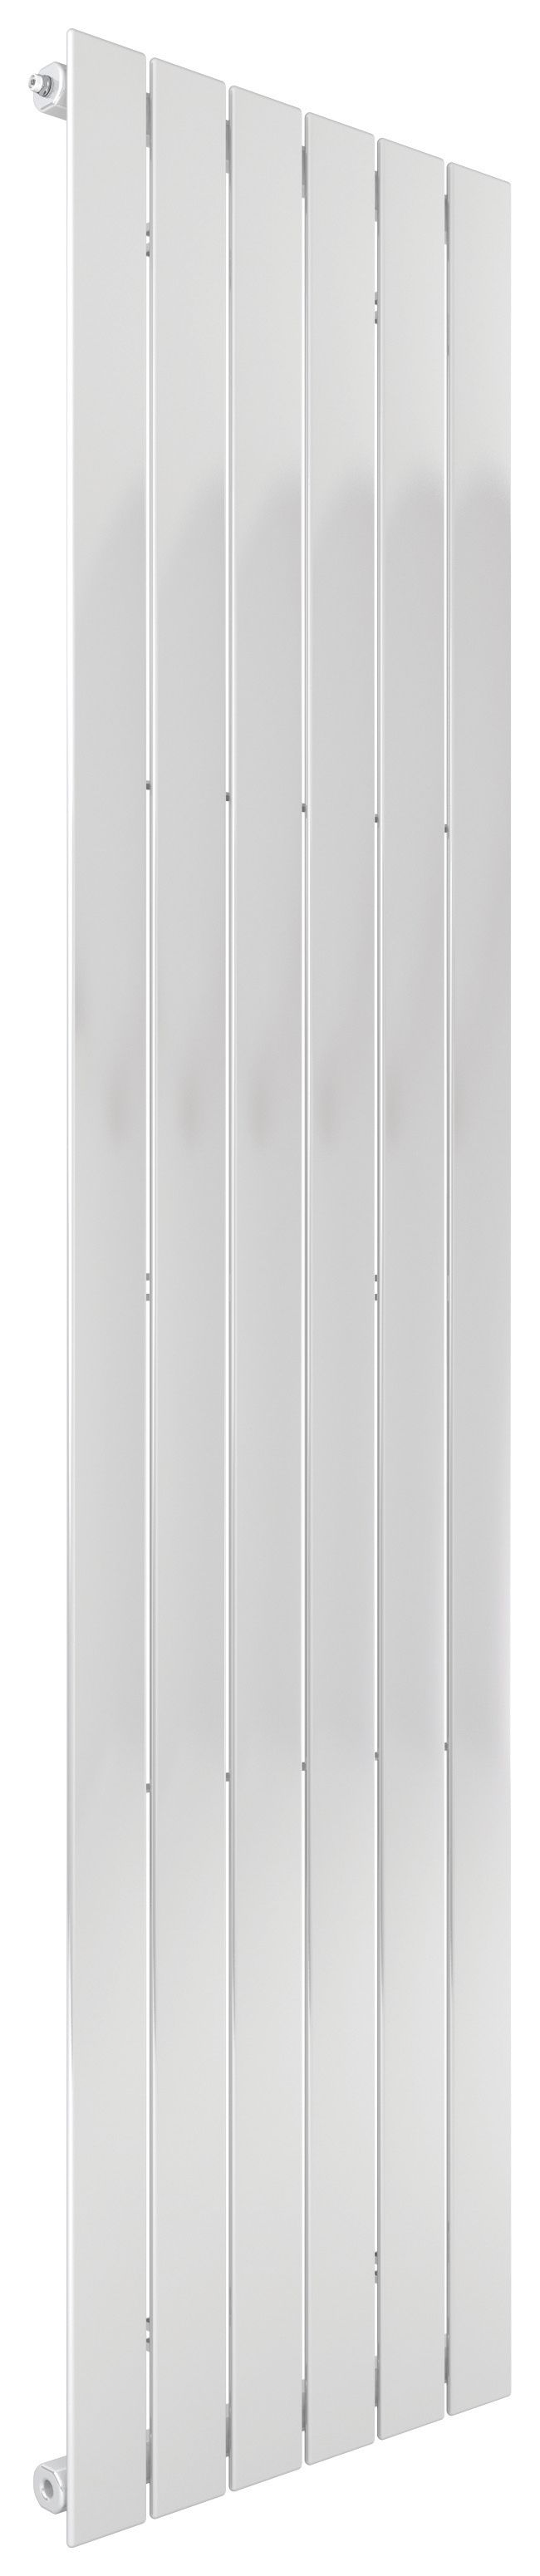 Henrad Verona Vertical Designer Radiator - White 1800 x 588 mm